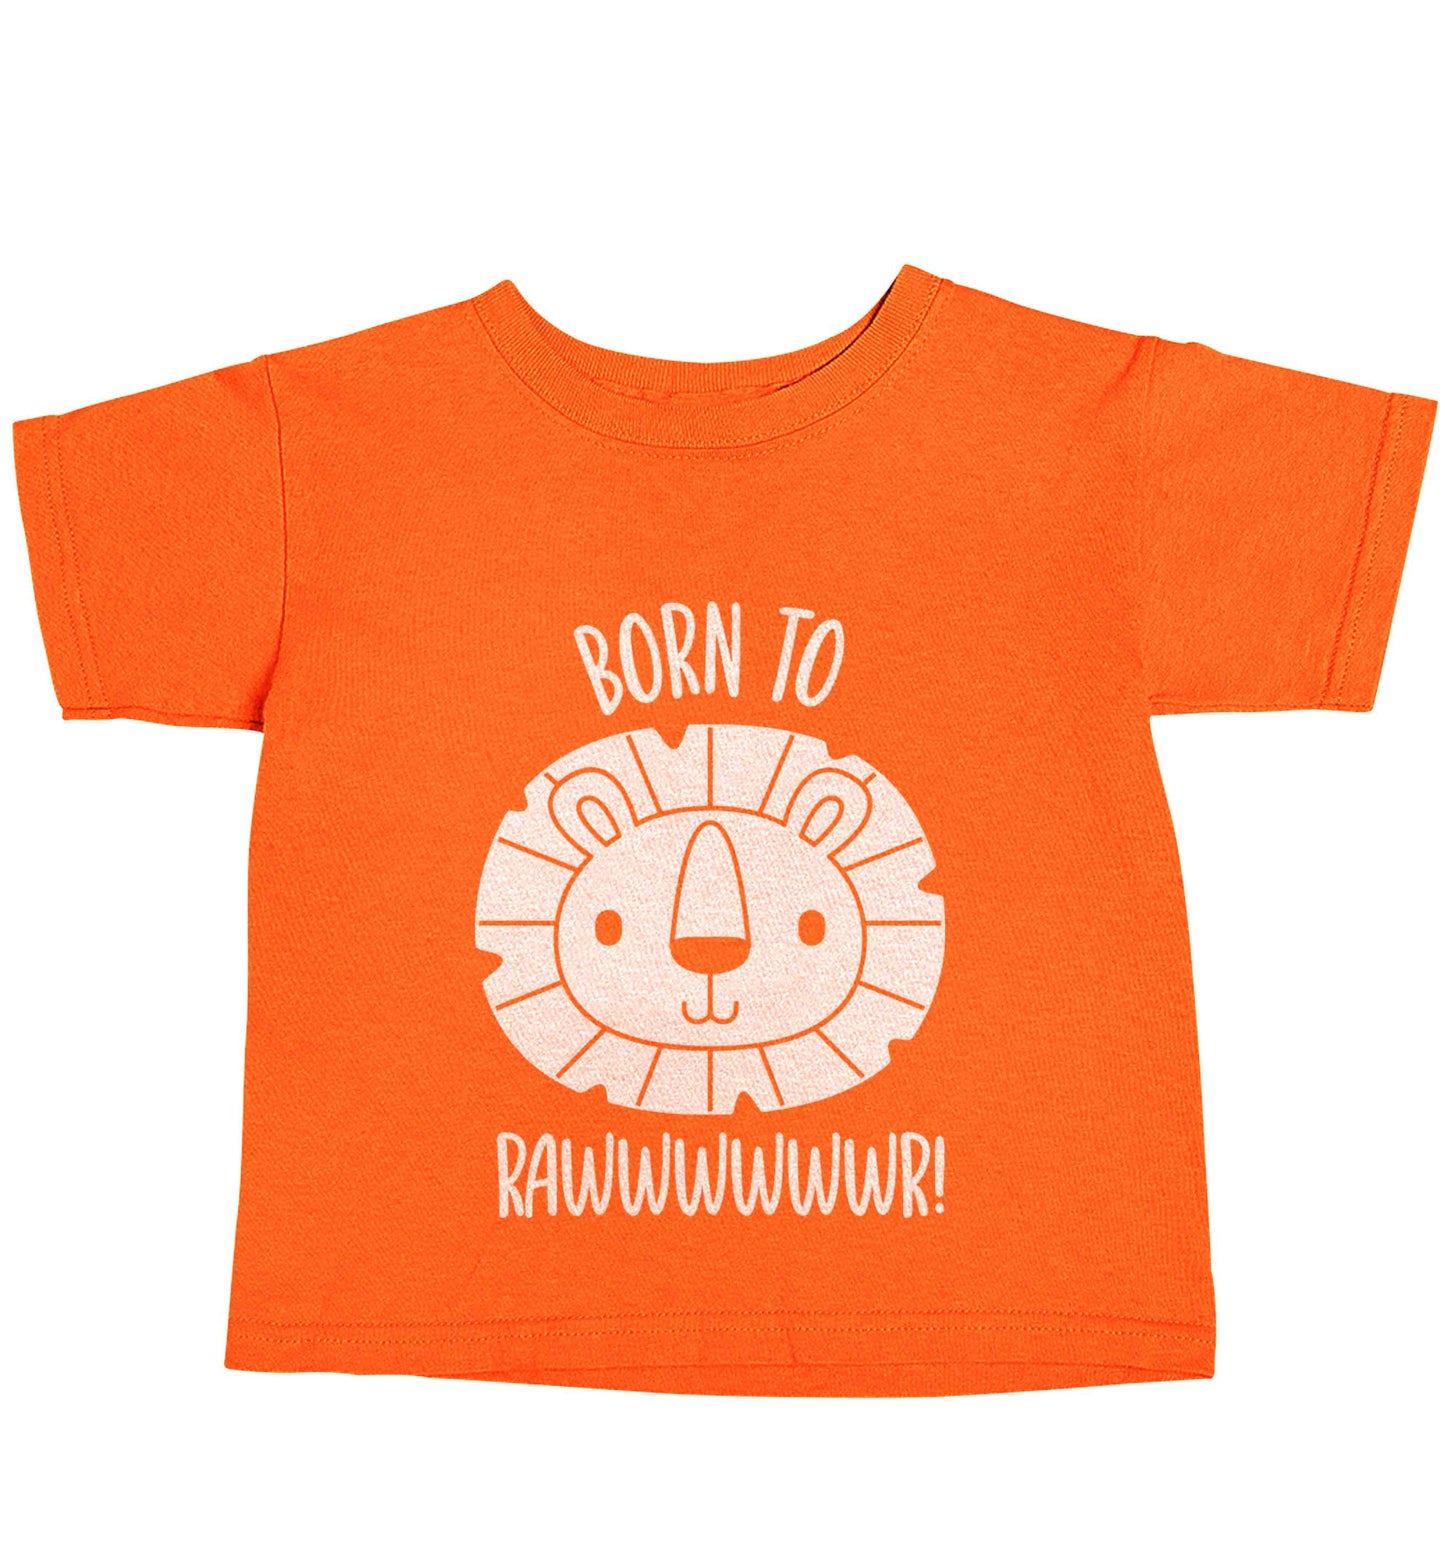 Born to rawr orange baby toddler Tshirt 2 Years